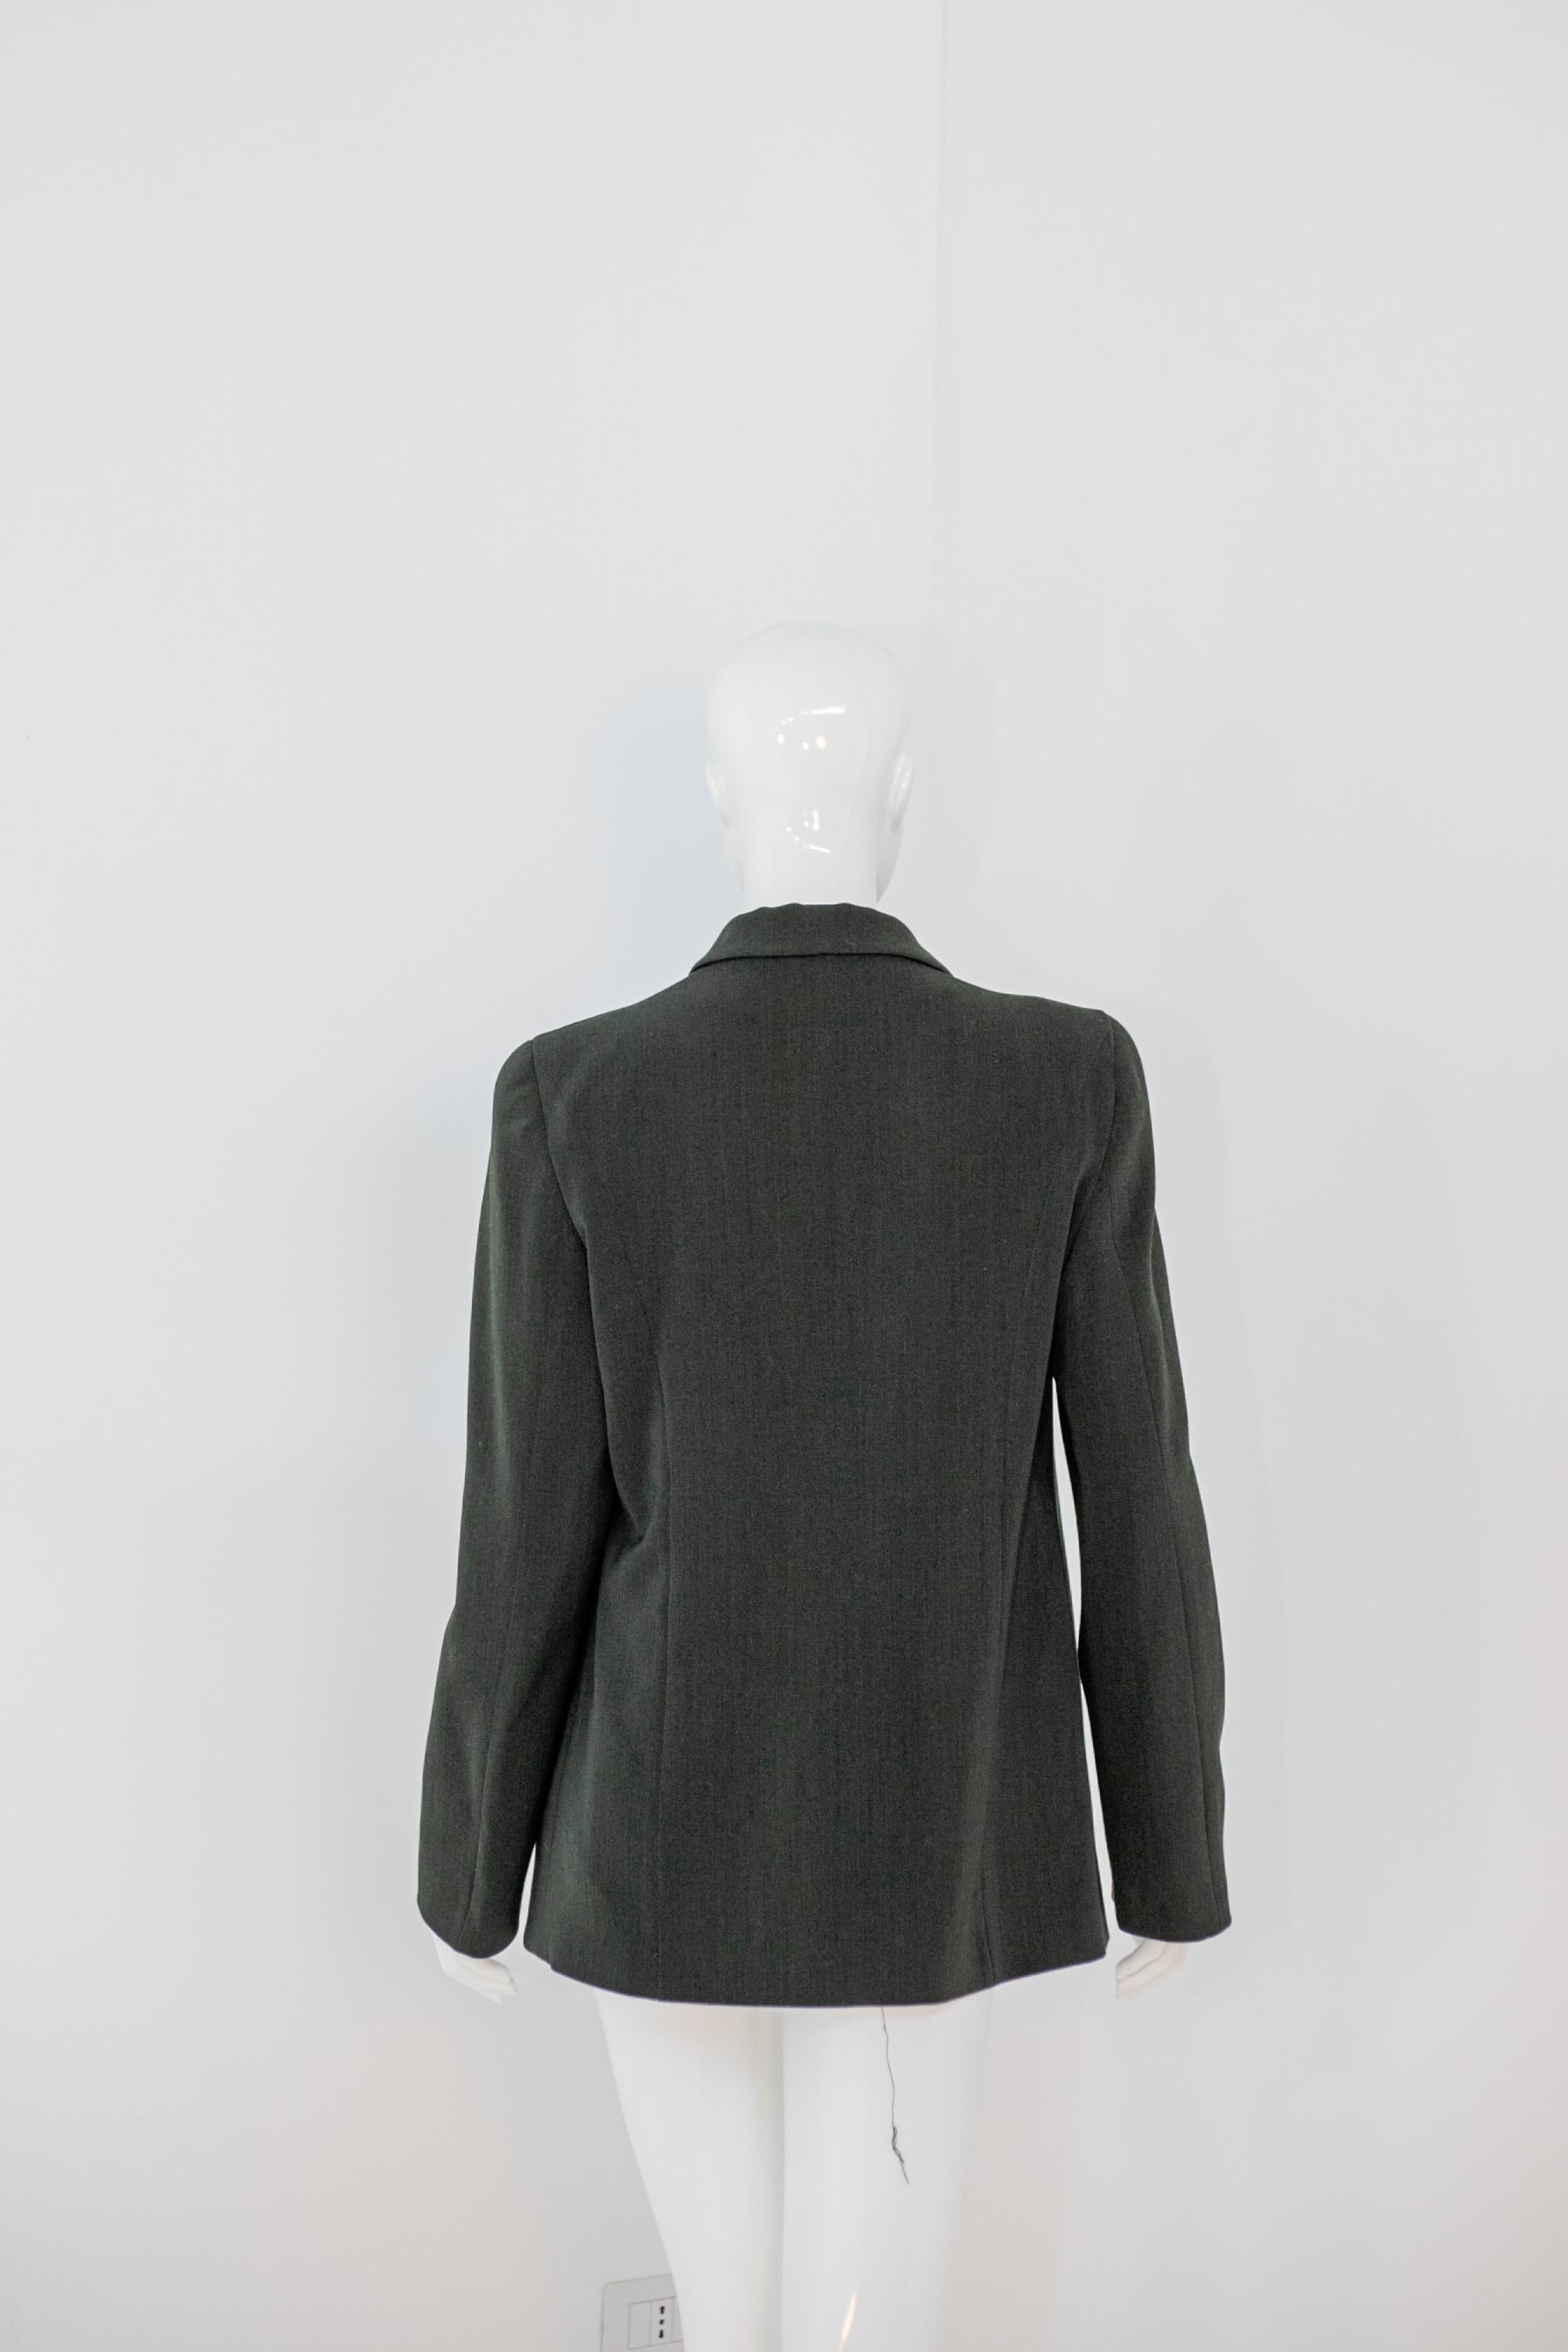 Gattinoni Vintage Elegant Dark Green Wool Shirt For Sale 1